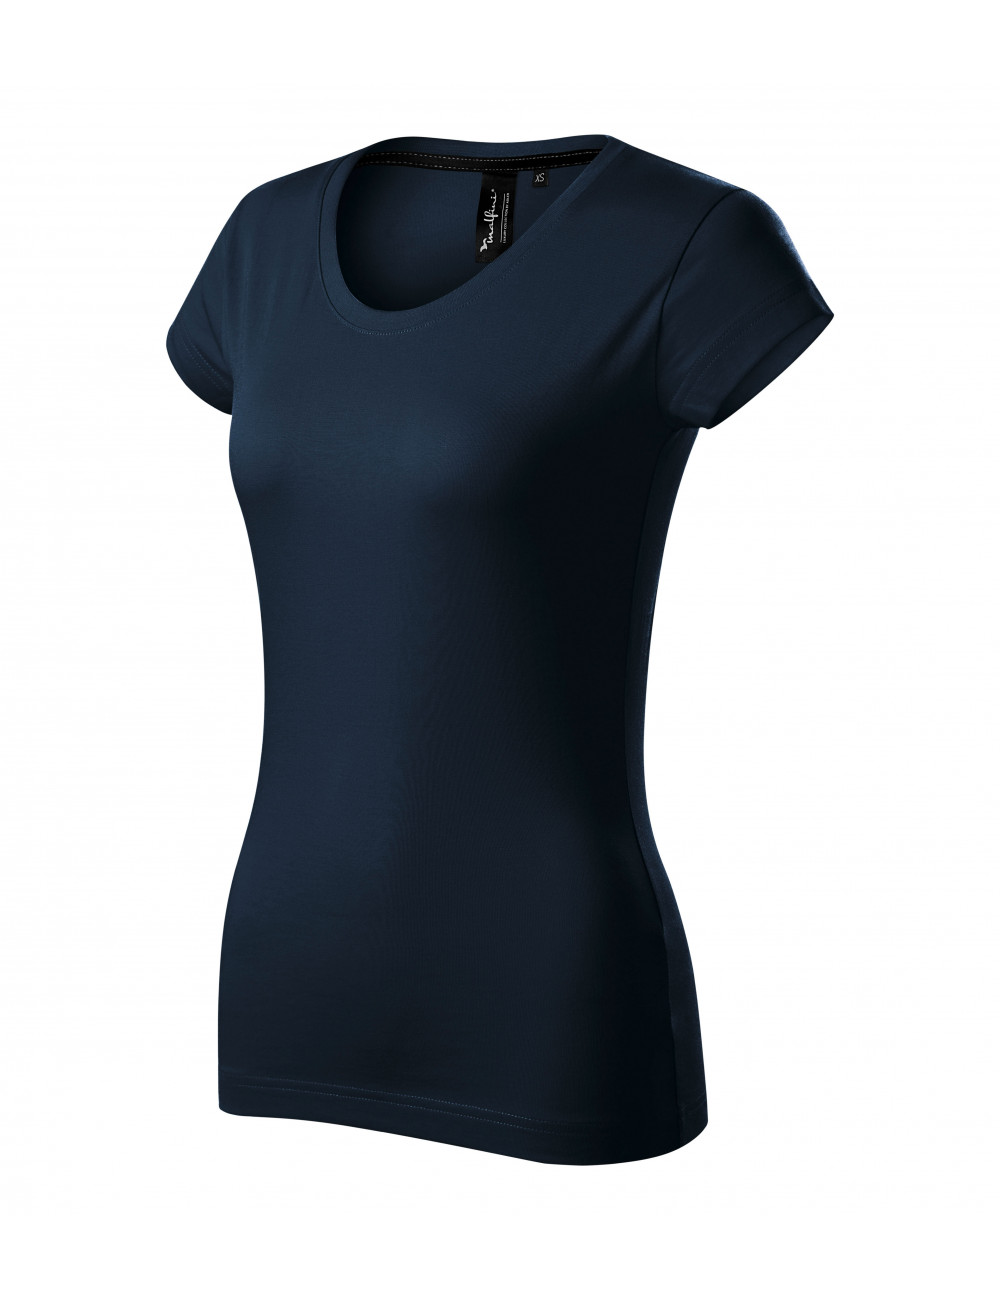 Women`s exclusive t-shirt 154 navy blue Adler Malfinipremium